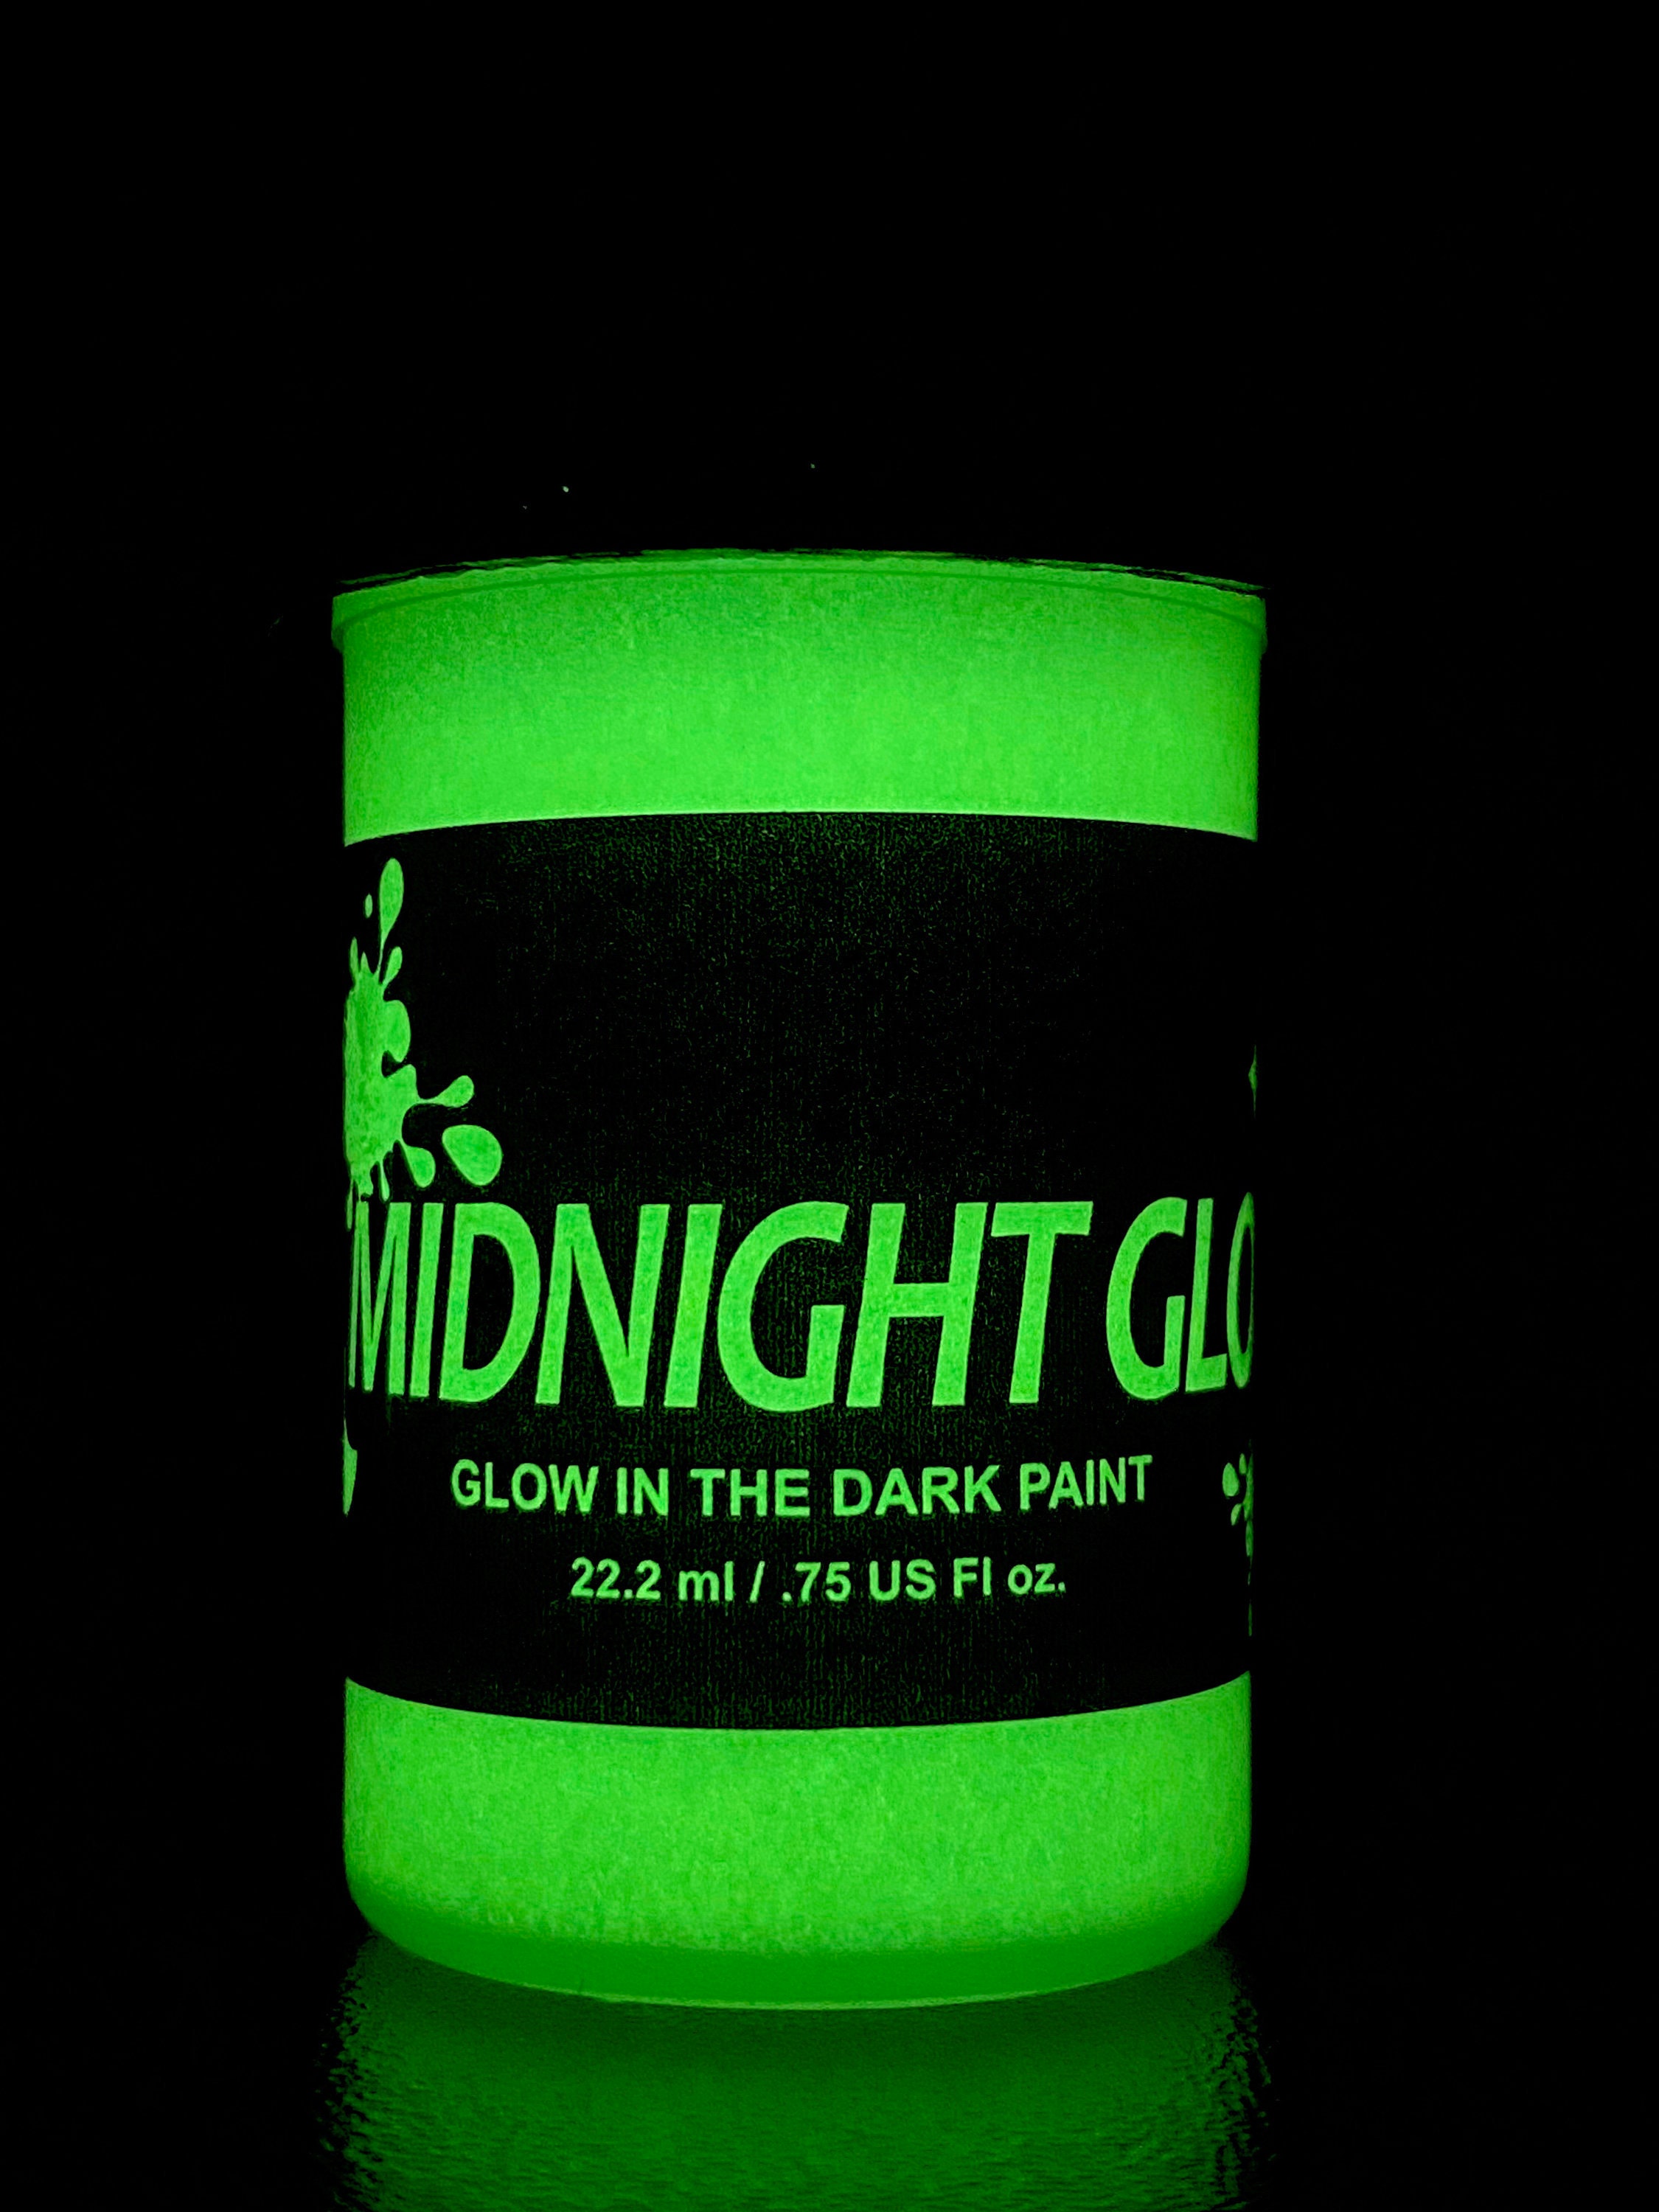 Midnight Glo UV Face & Body Paint Set - Fluorescent Face Paints - Blacklight  Reactive - Safe, Washable, Non-Toxic (6 Bottles 0.75 oz. Each) 0.75 Fl Oz  (Pack of 6)